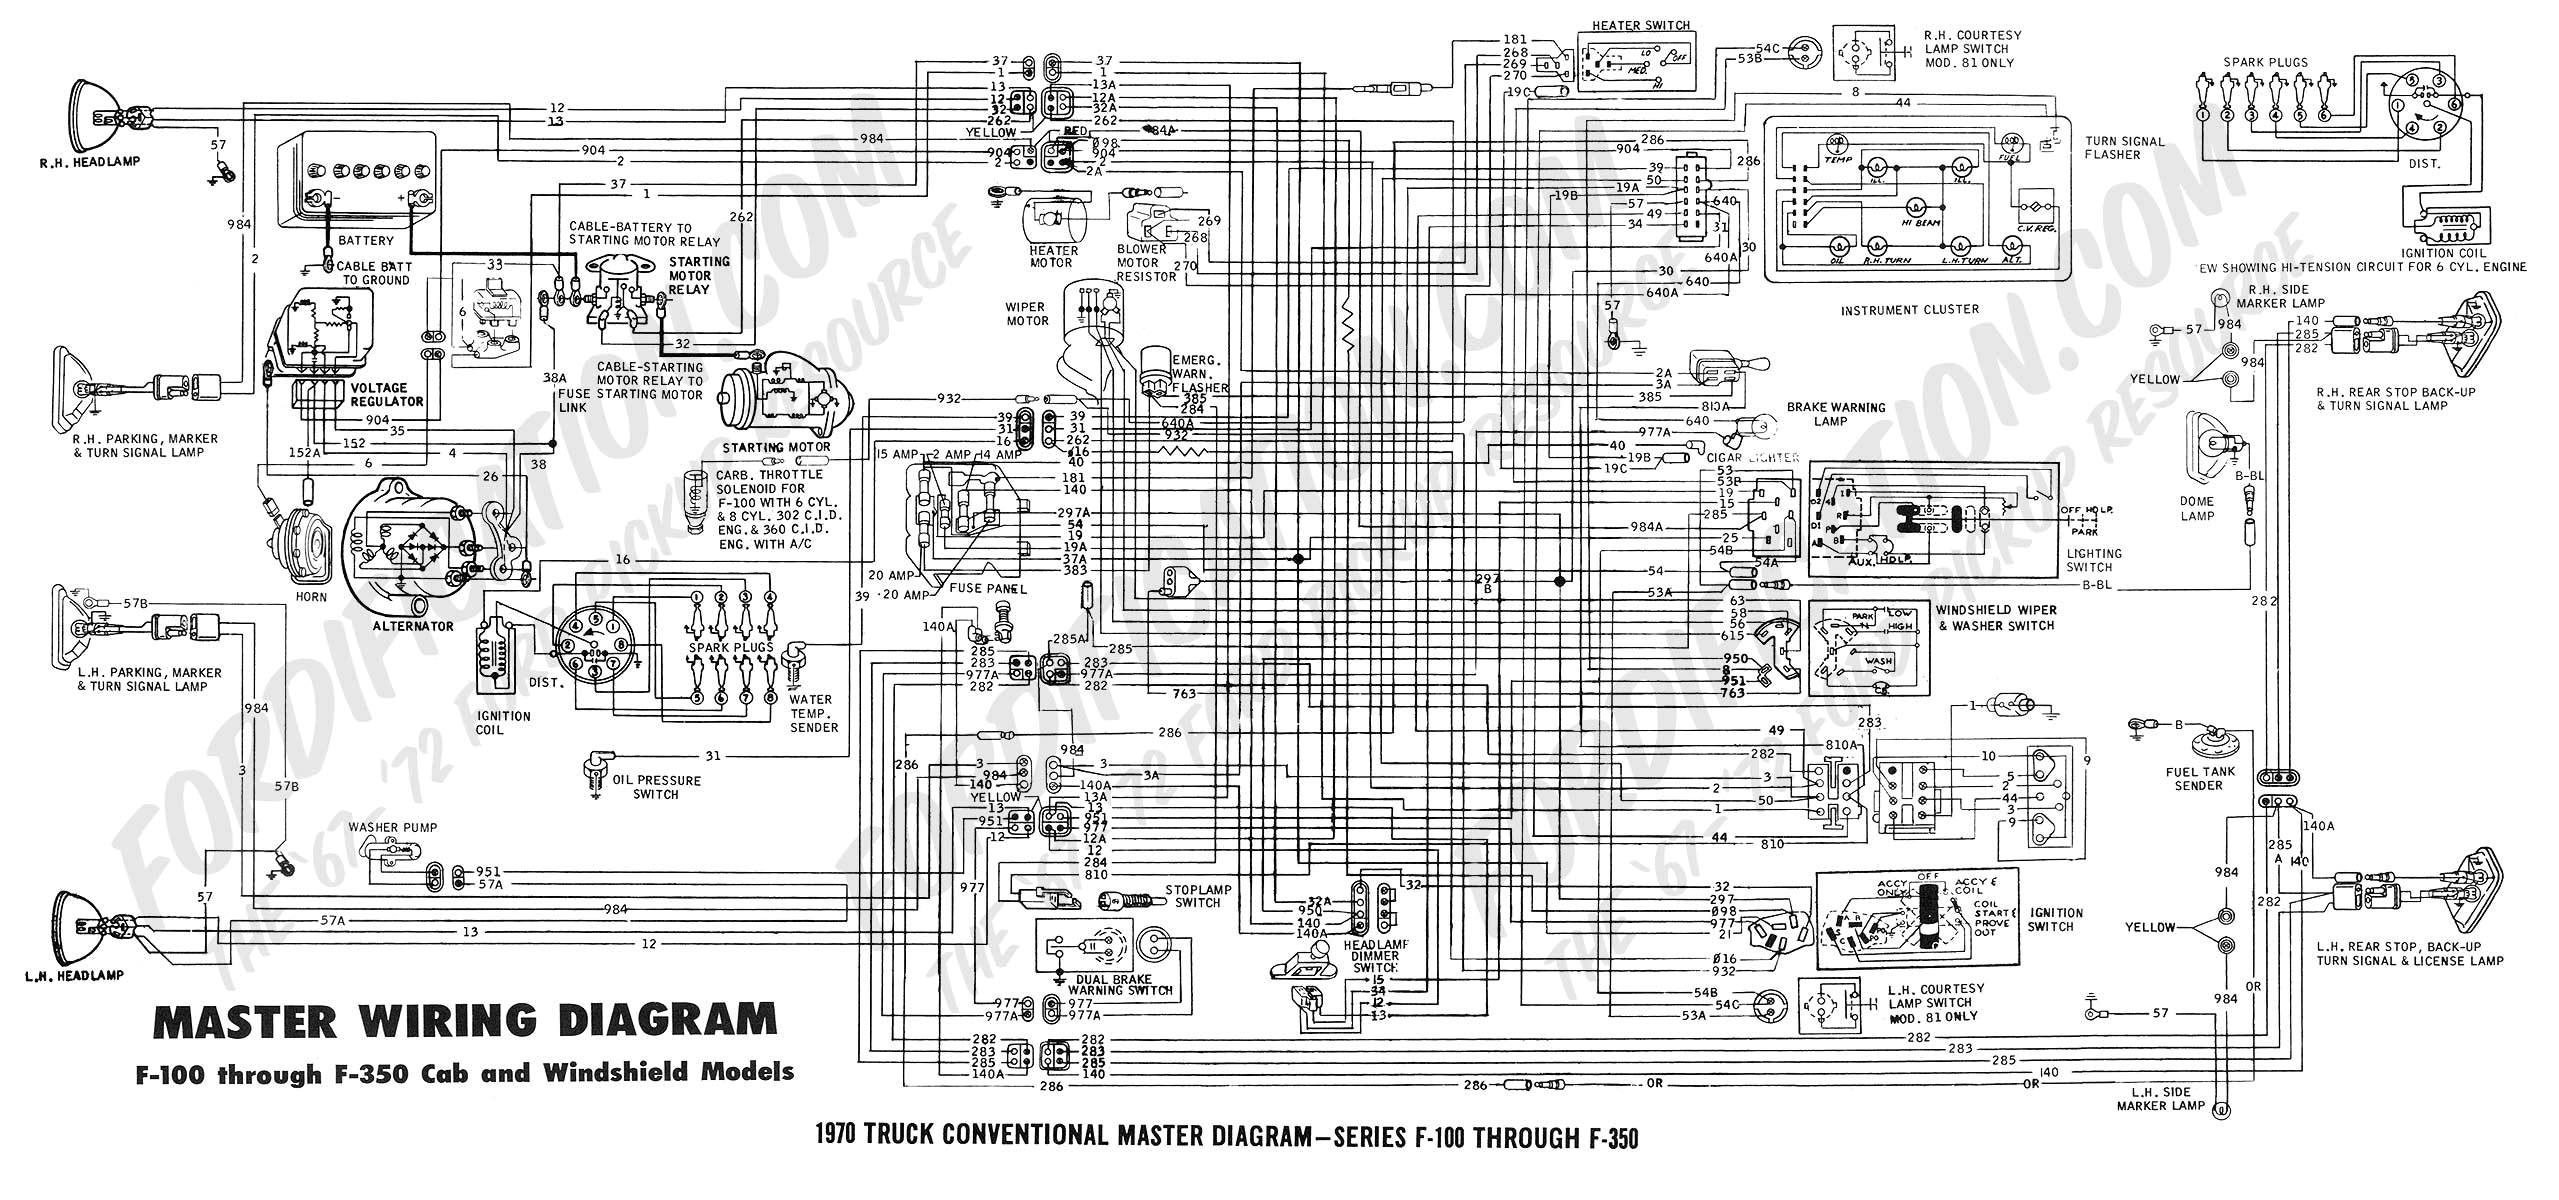 1997 ford truck wiring diagram wiring diagram perfomance 1997 ford truck radio wiring diagram 1997 ford truck wiring diagram